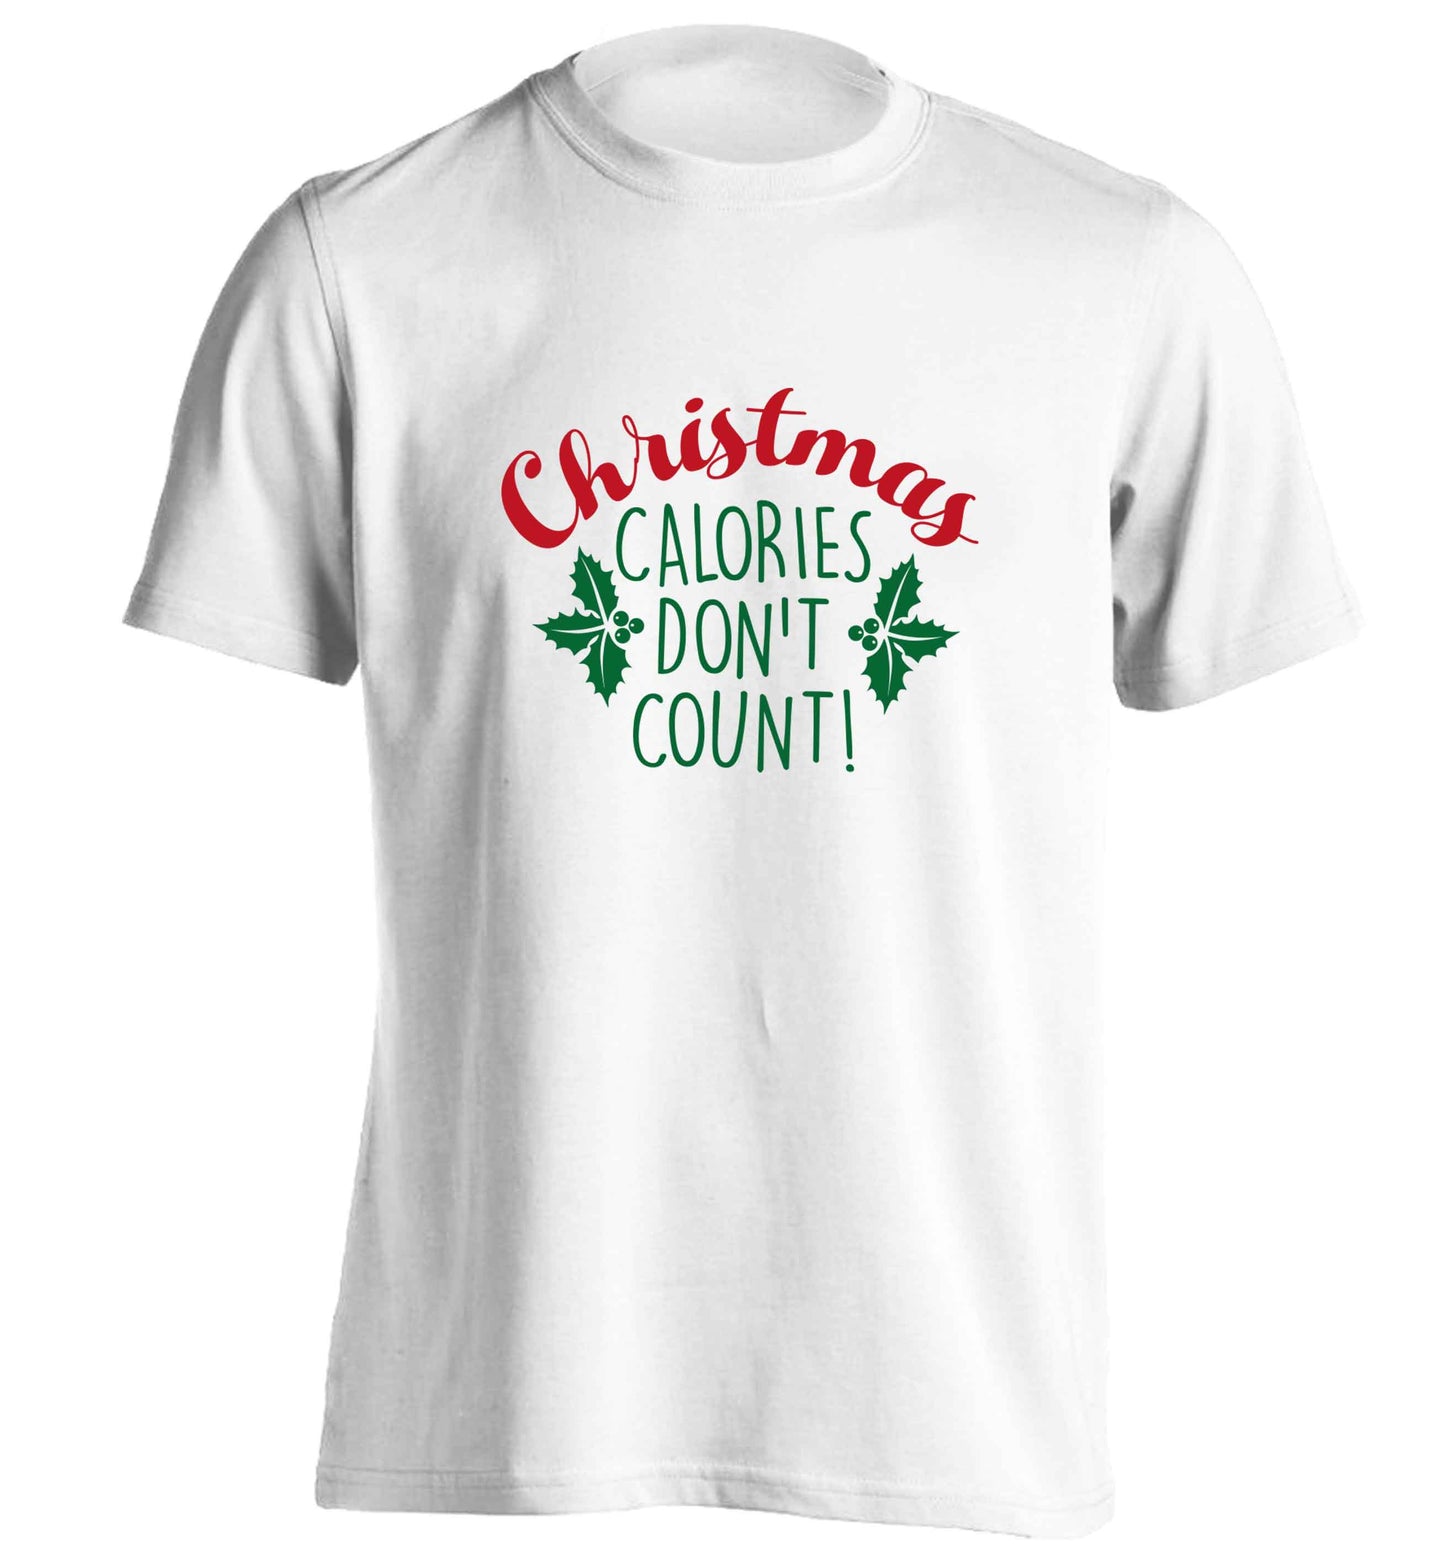 Christmas calories don't count adults unisex white Tshirt 2XL